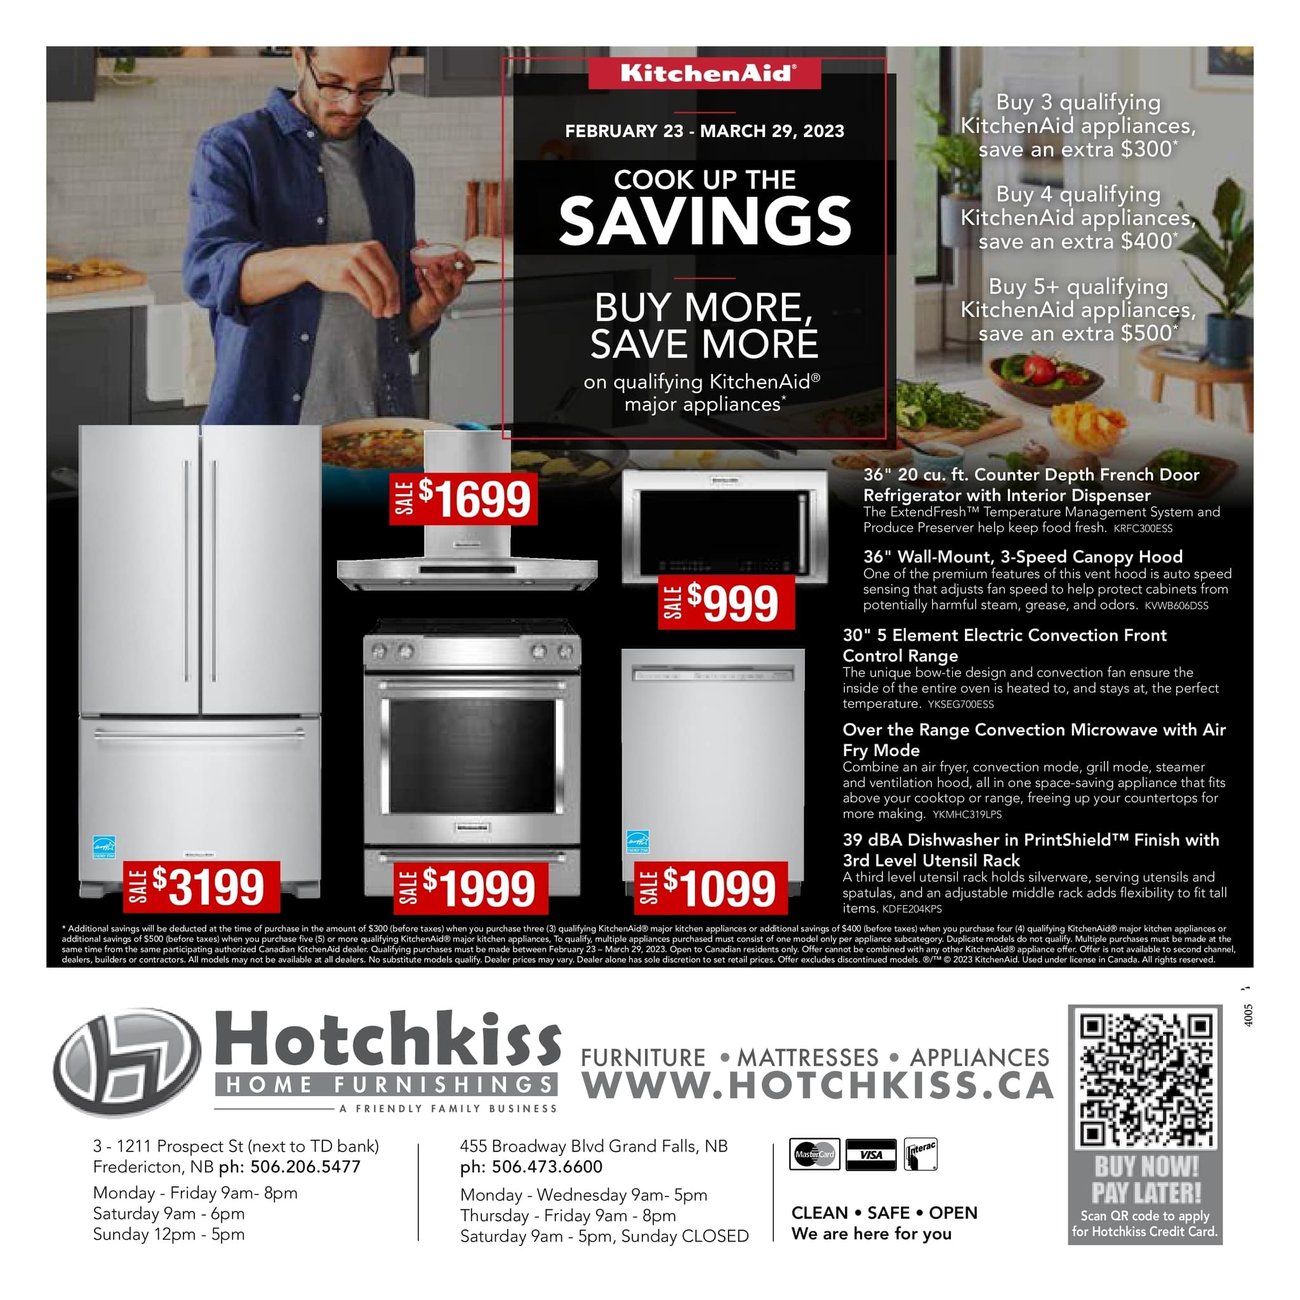 Hotchkiss Home Furnishings - Maytag+KitchenAid Sale - Page 4